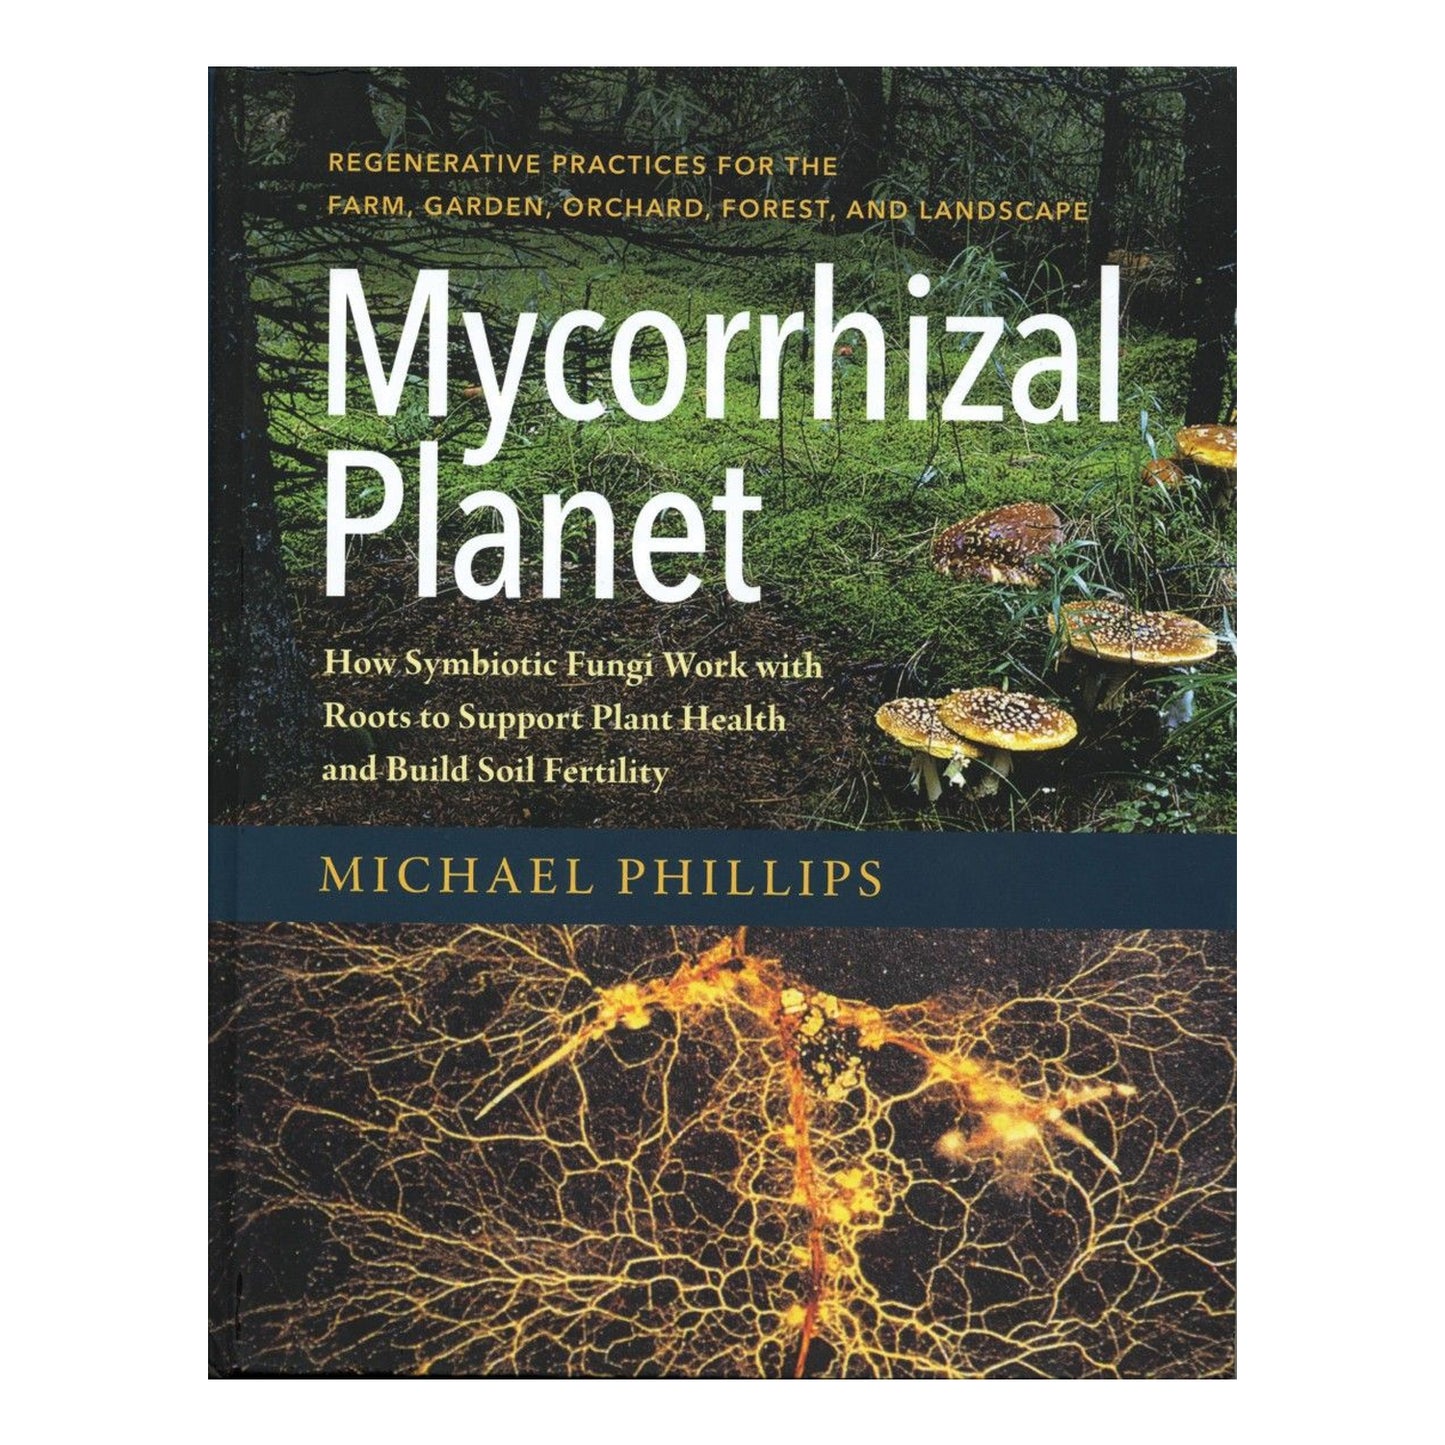 Mycorrhizal Planet by Michael Phillips